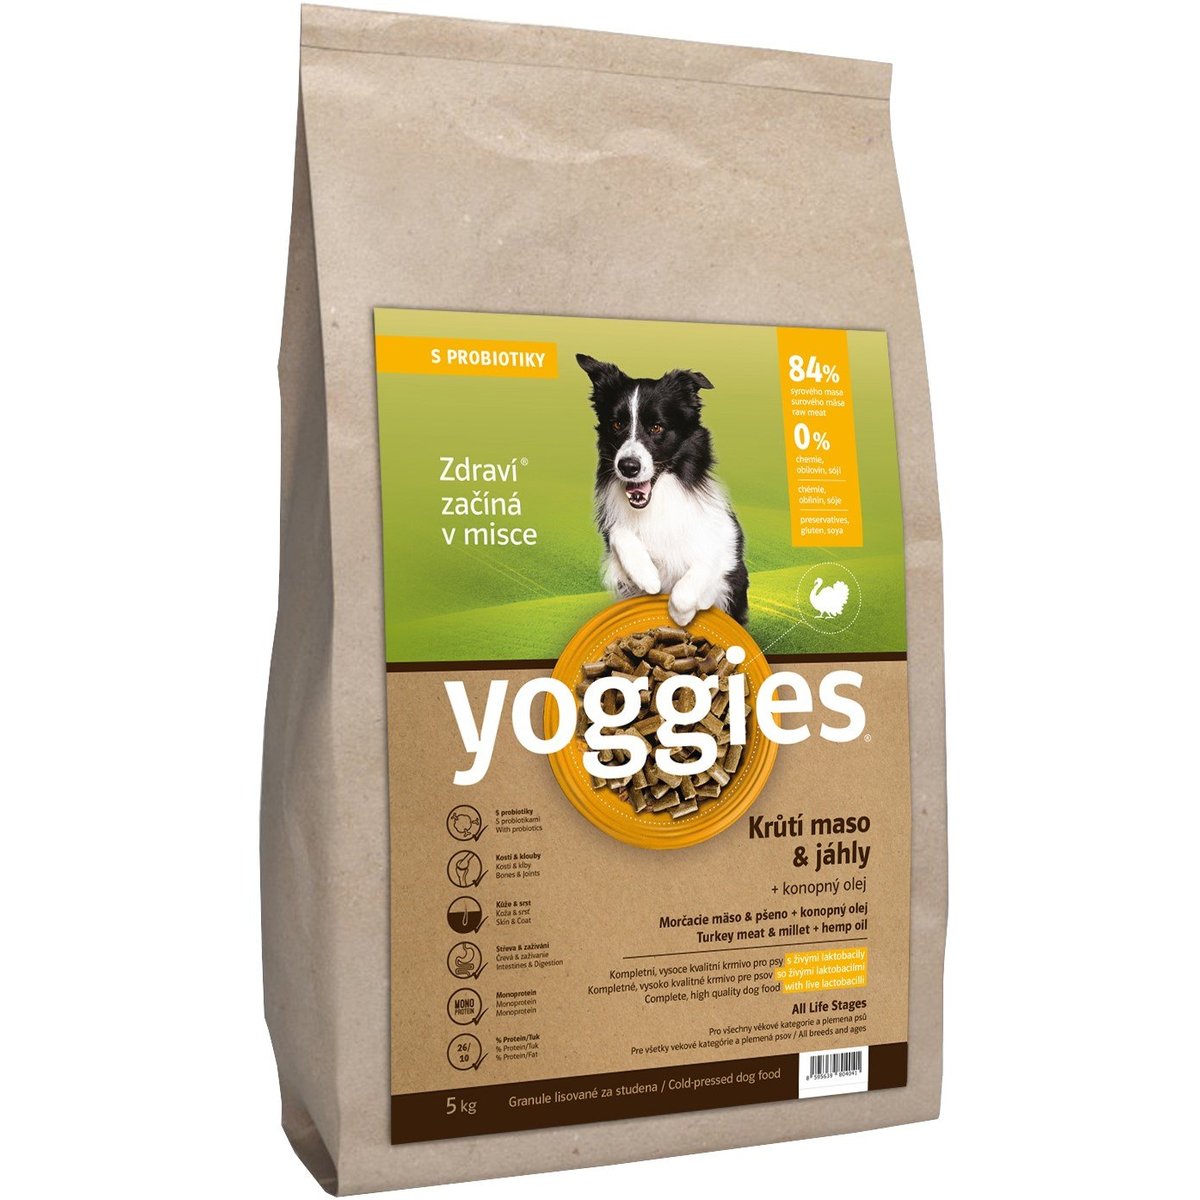 Yoggies Krůtí maso a jáhly – granule lisované za studena s probiotiky pro psy